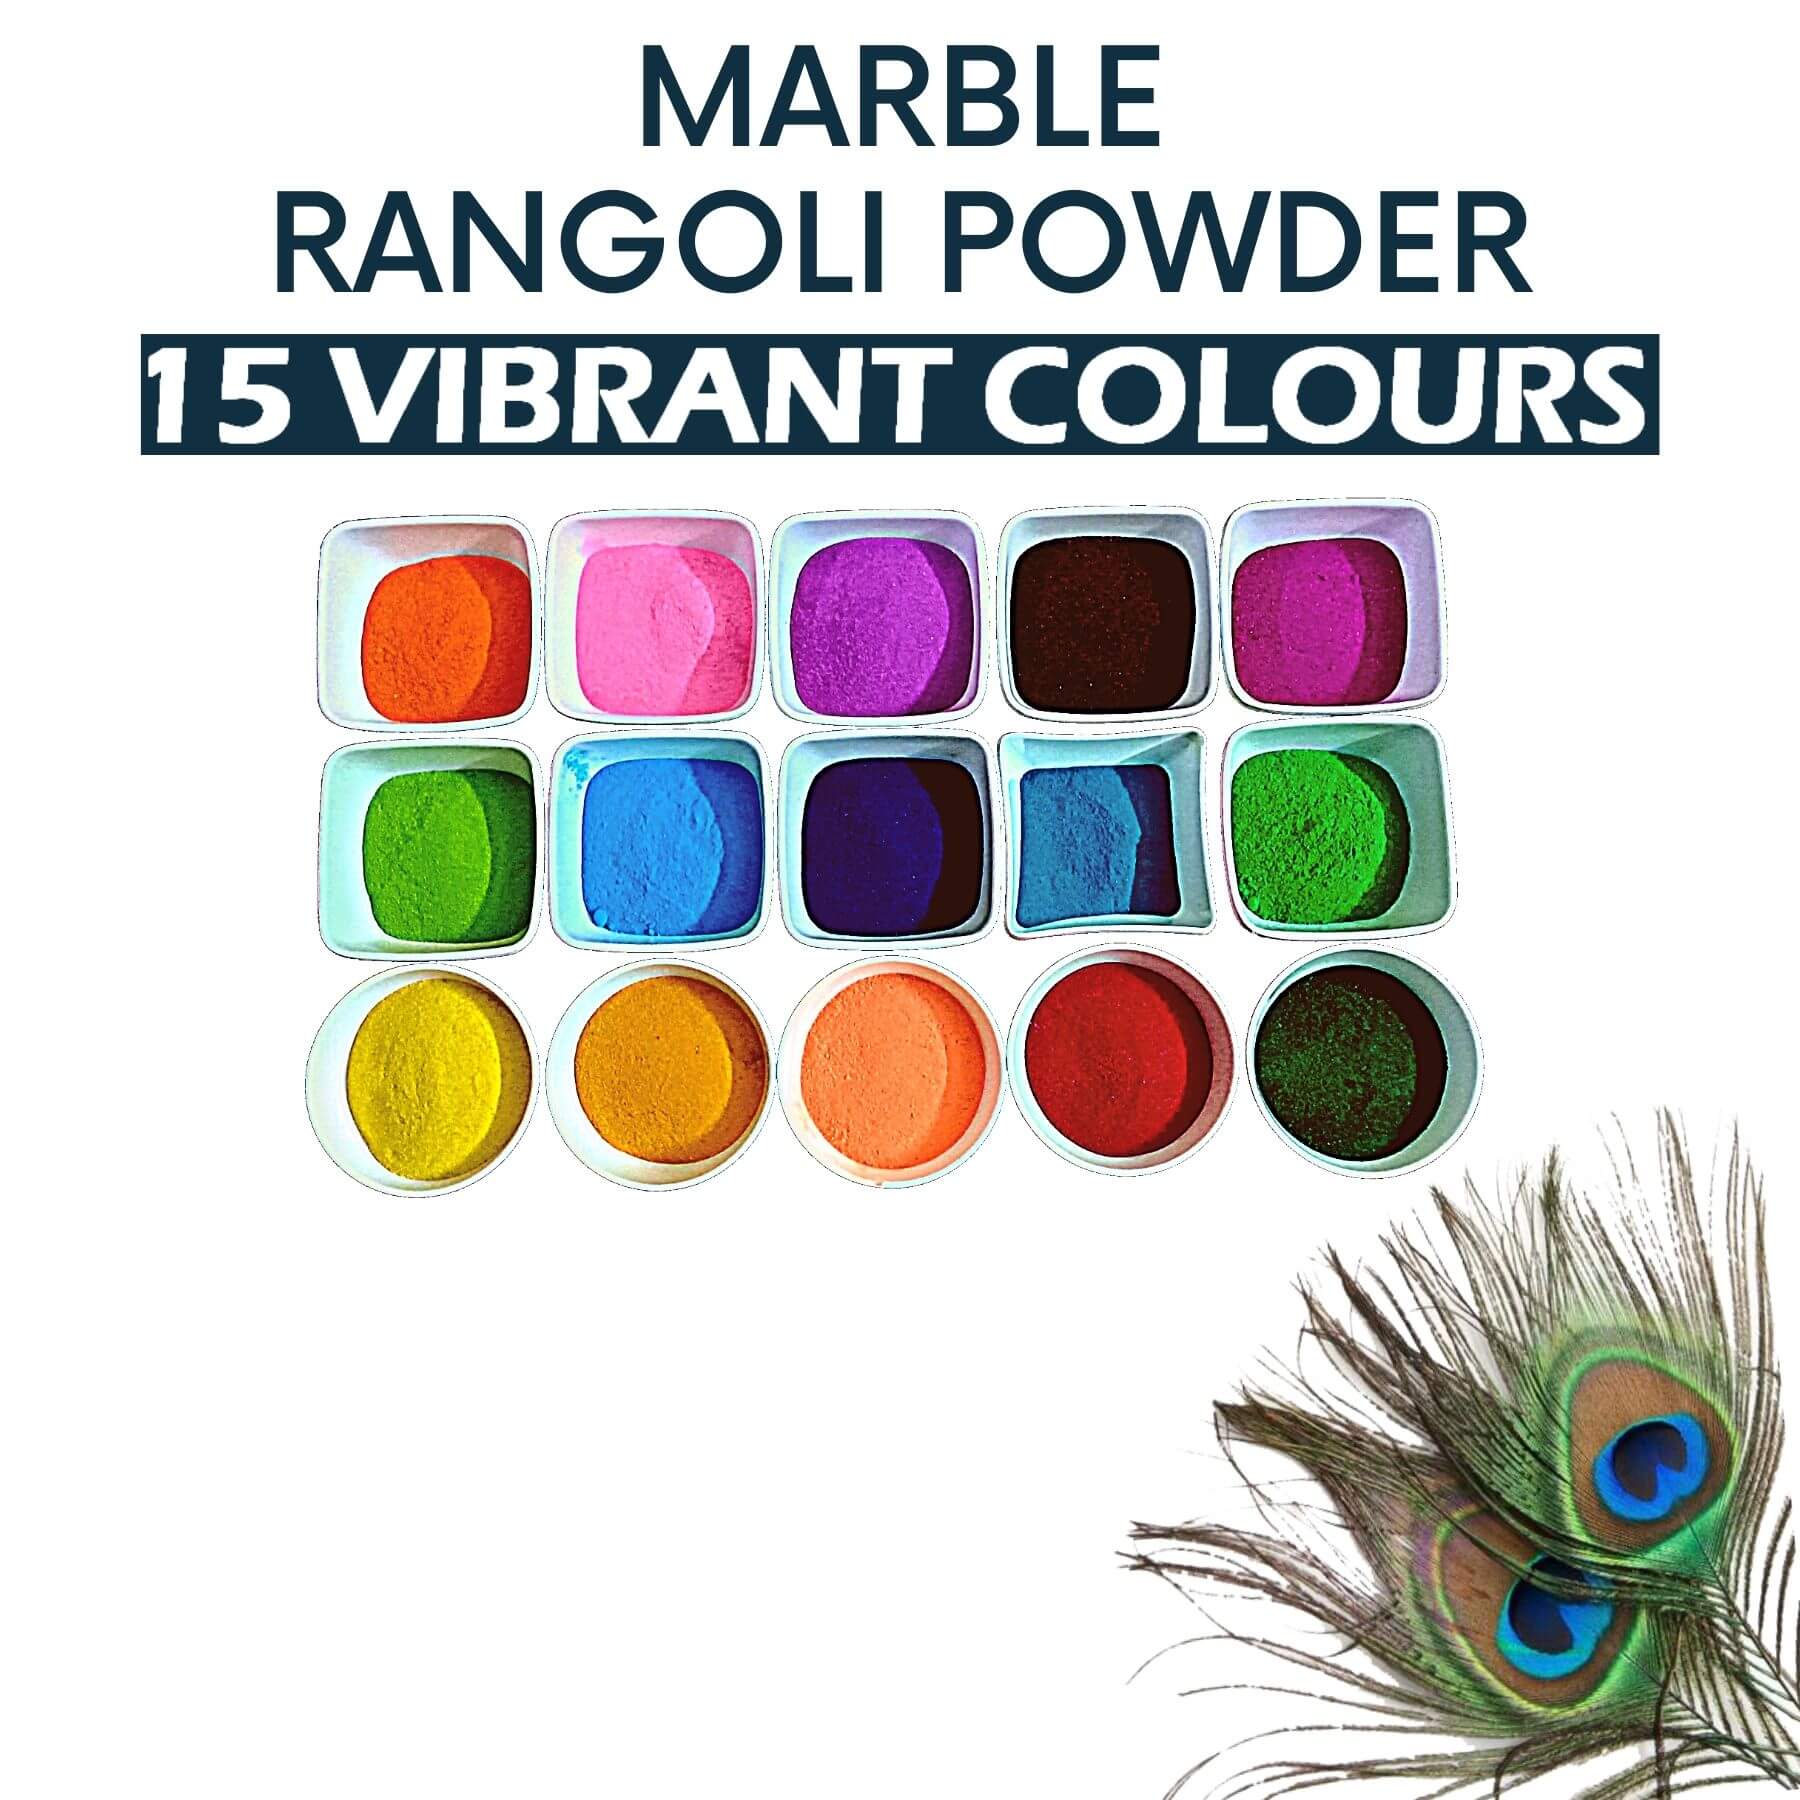 Marble Rangoli Powder - 15 Vibrant Colours(Each 200g) - 3Kg Pack +